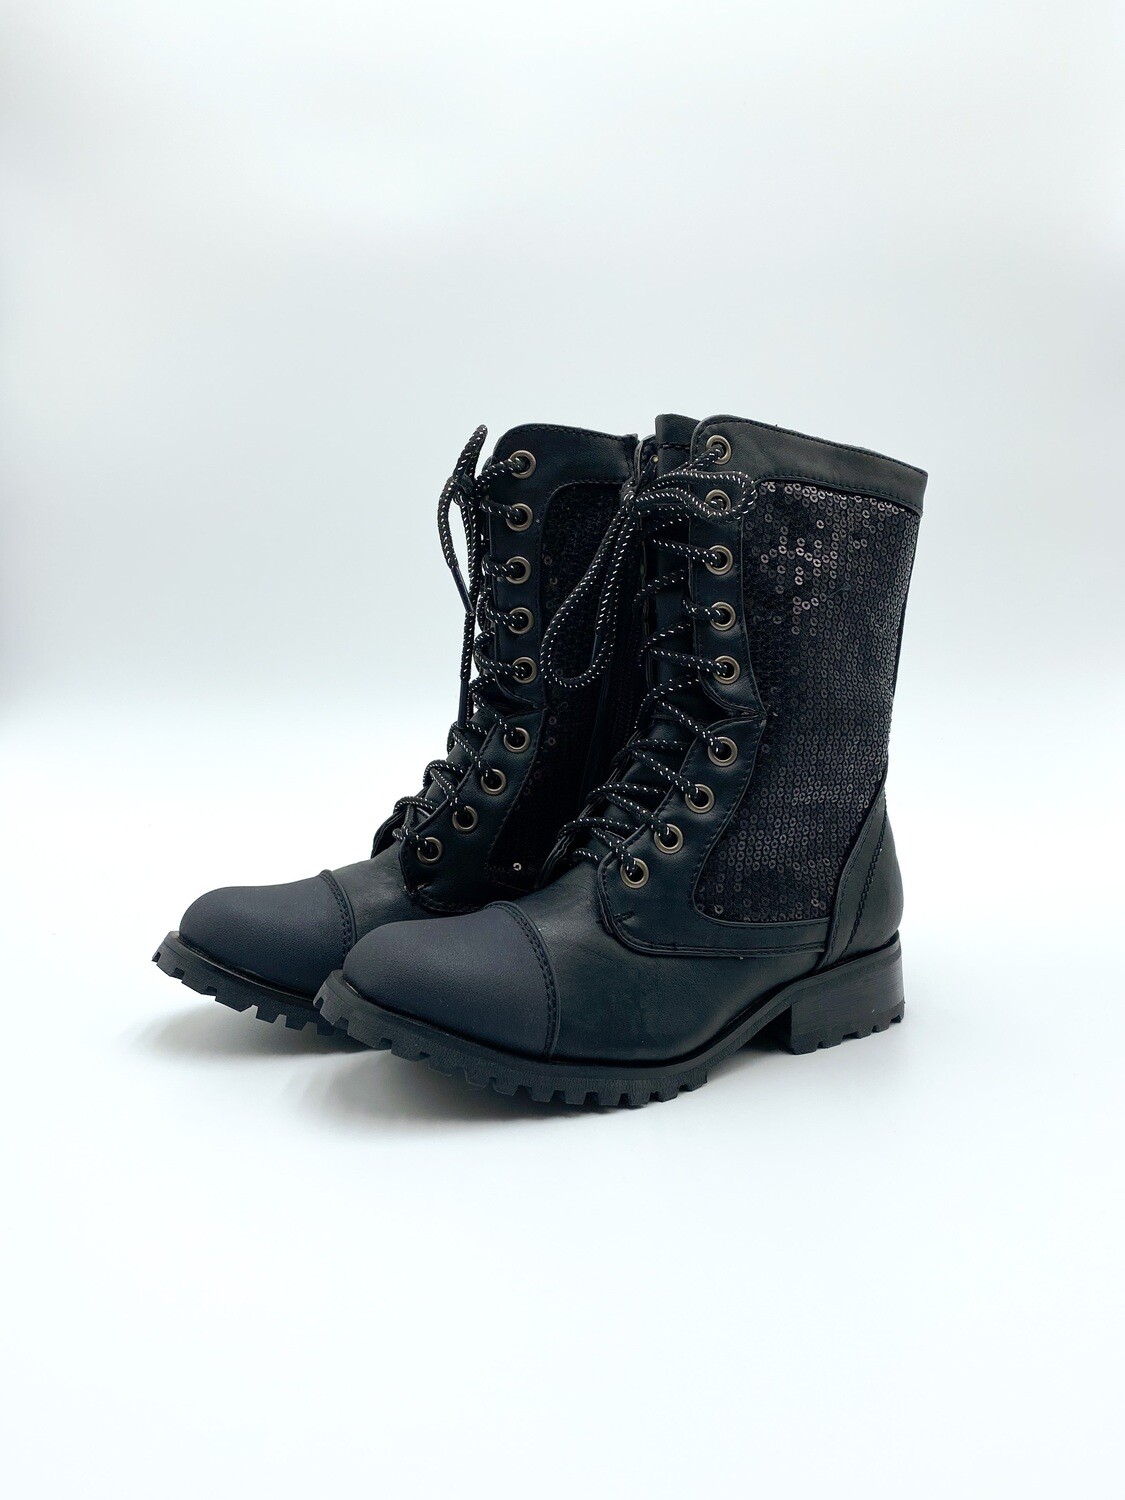 Gia-Mia Combat Sequin Boot, Color: Black, Size: 2